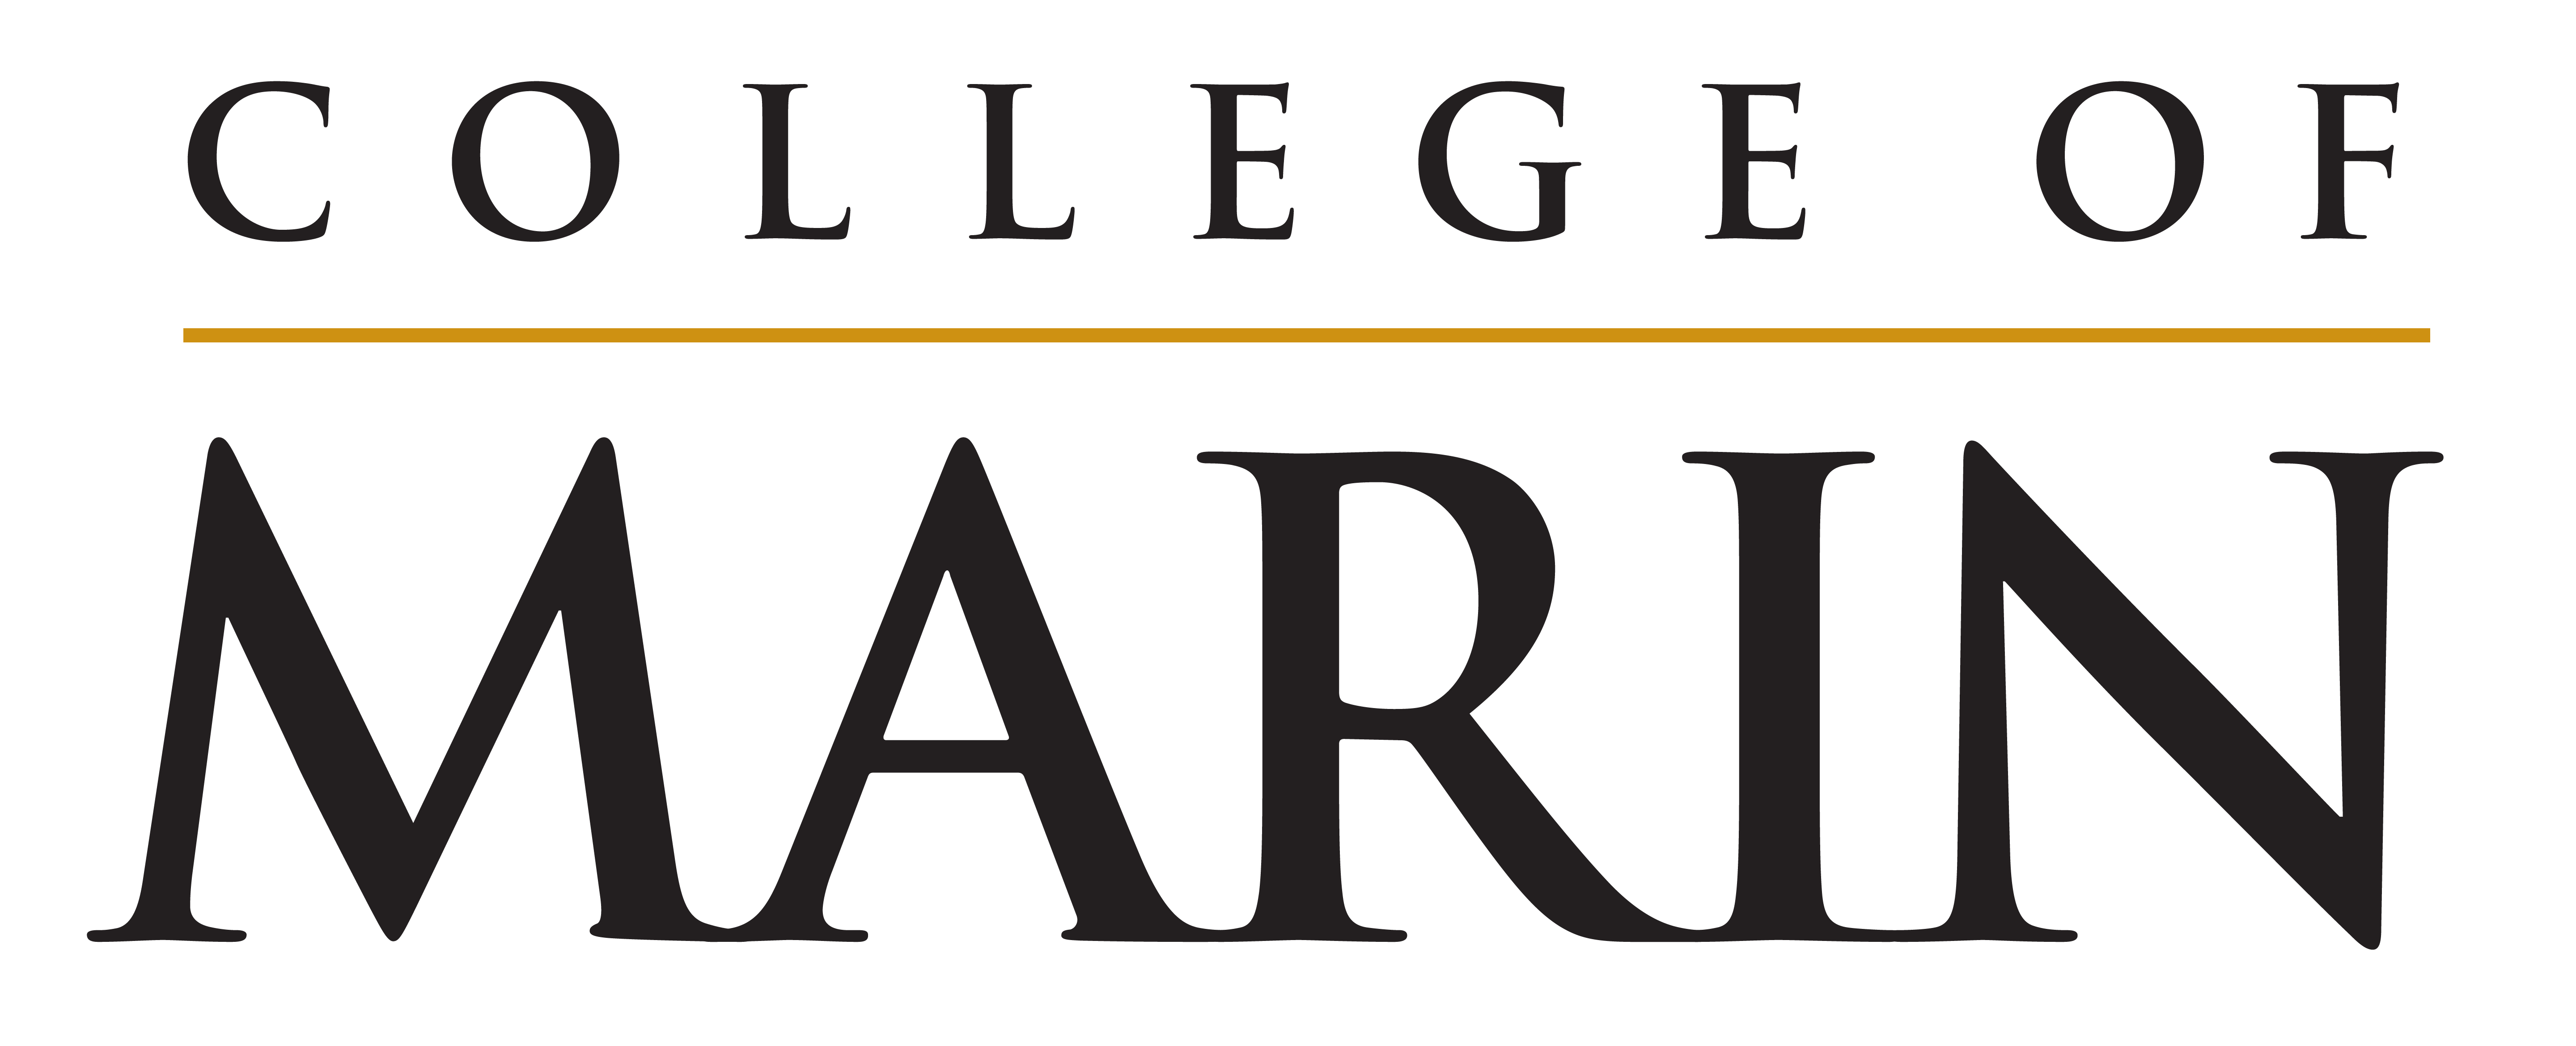 College of Marin logo